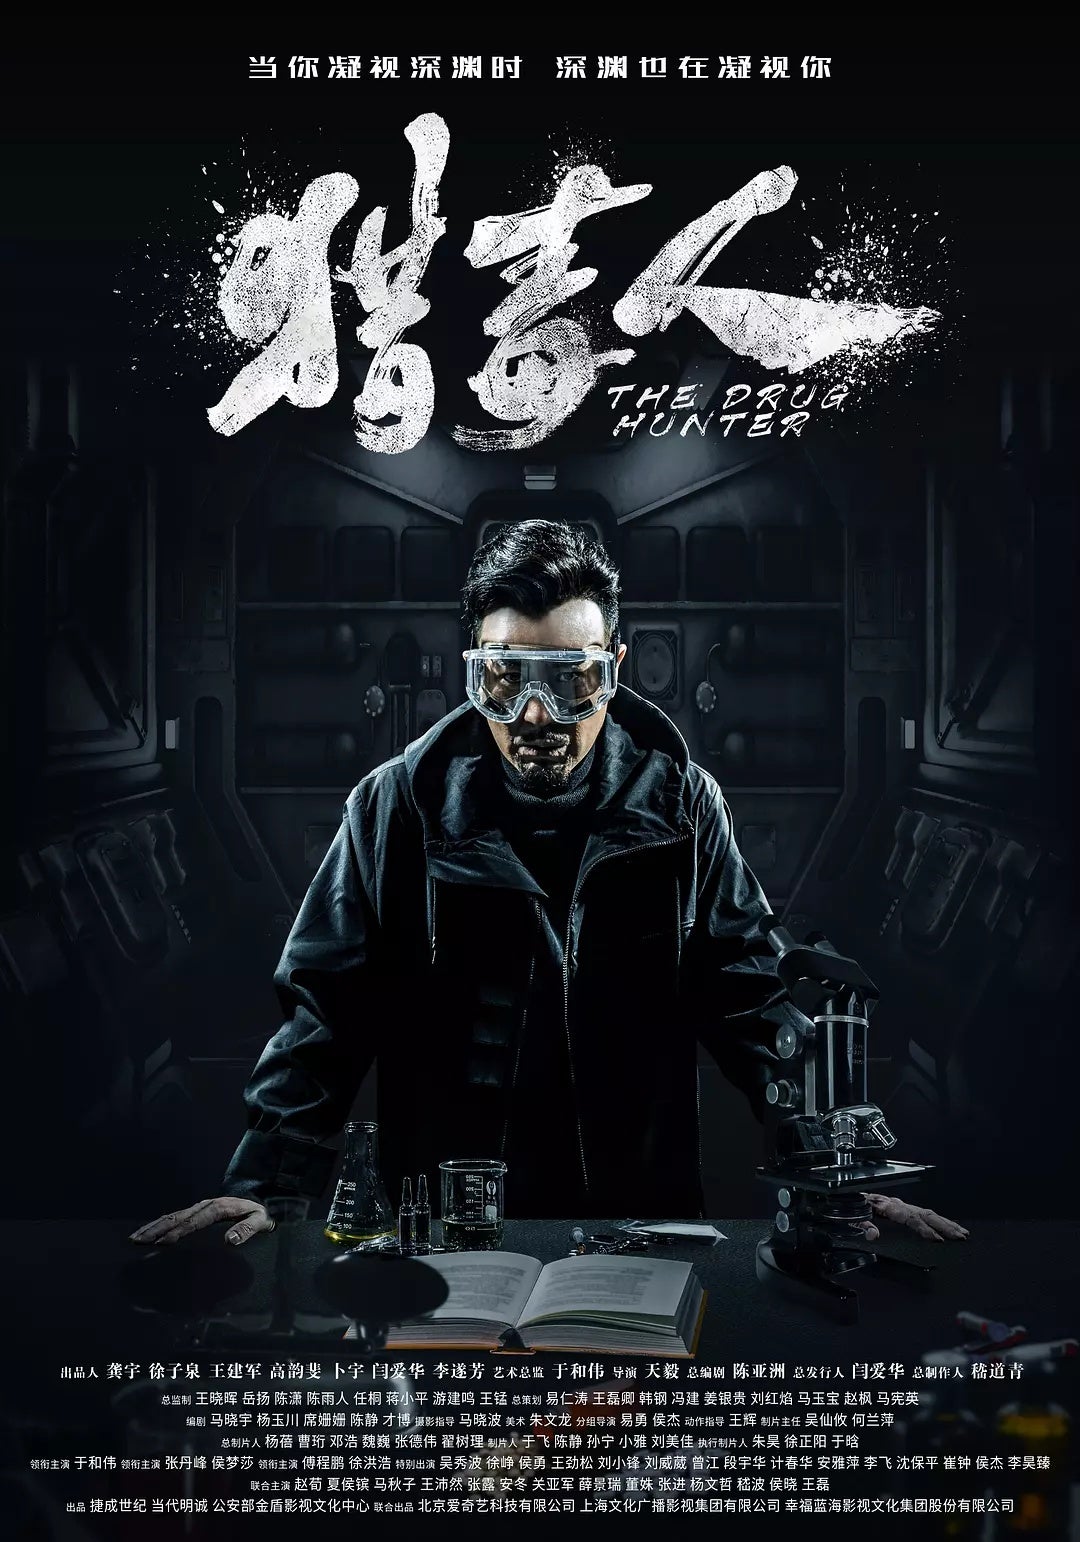 TV ratings for The Drug Hunter (猎毒人) in South Korea. Jiangsu Television TV series